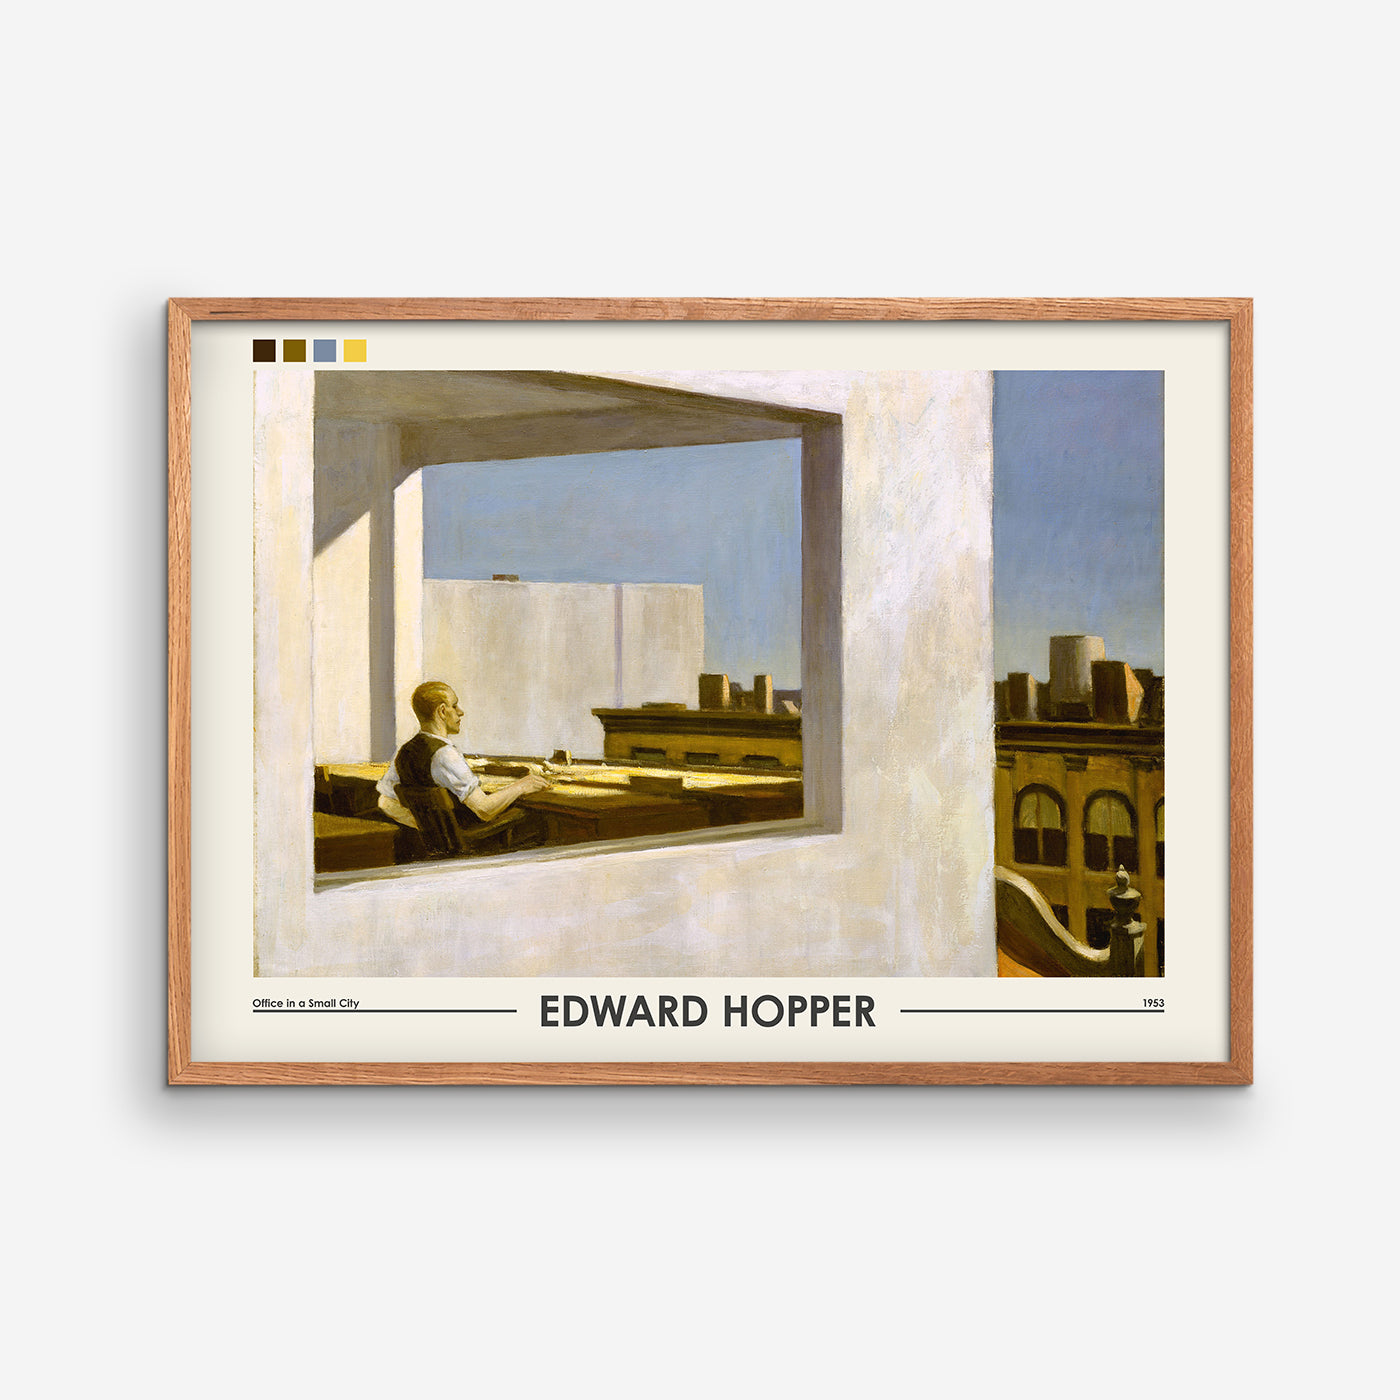 Office in a Small City - Edward Hopper